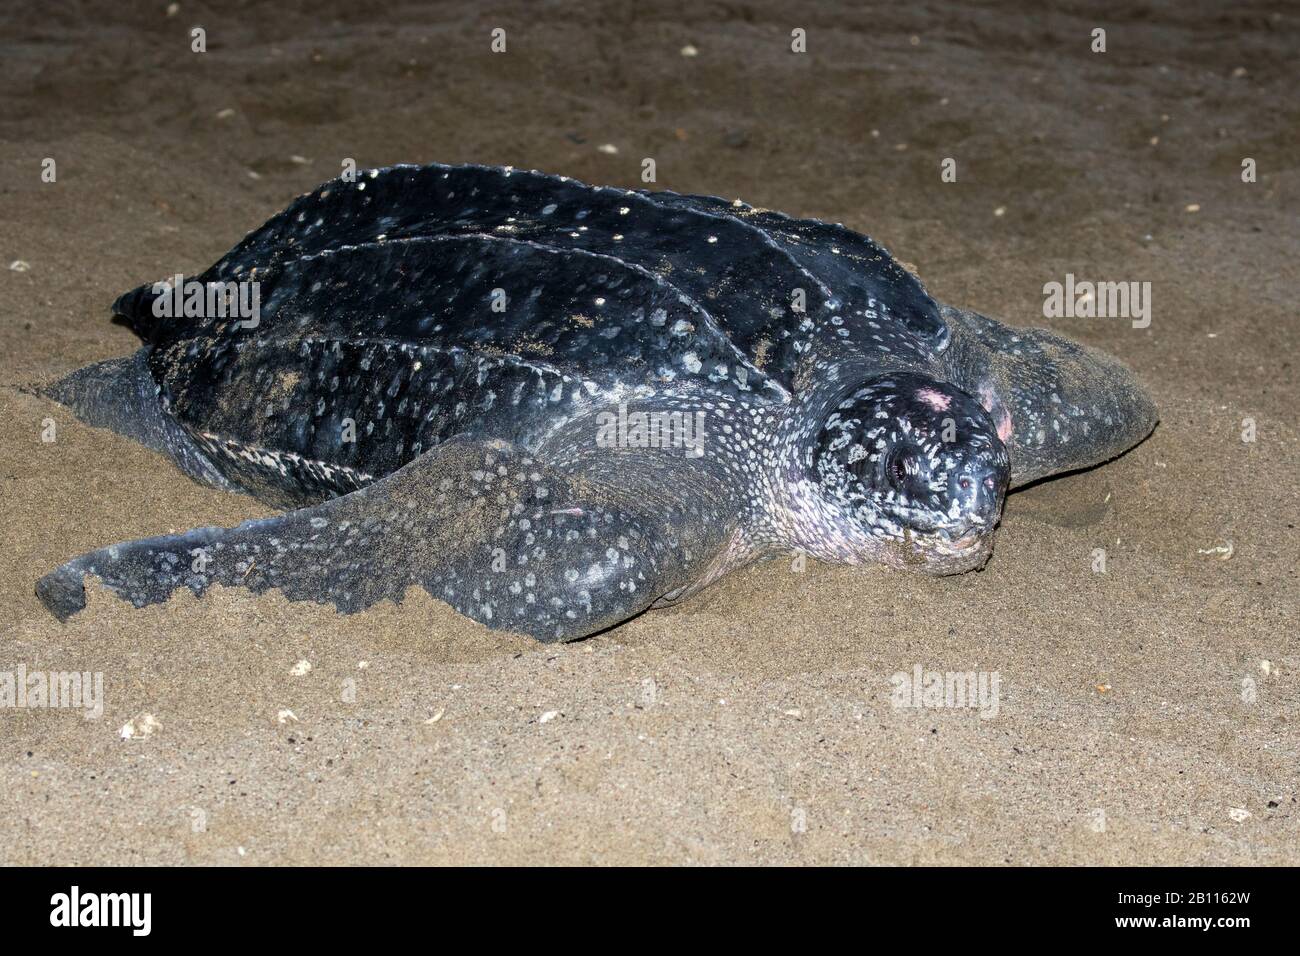 Tartaruga marina leatherback, leatherback, tartaruga leathery, luth tartaruga (Dermochelys coriacea), la più grande tartaruga vivente, sulla spiaggia, Trinidad e Tobago, Trinidad Foto Stock